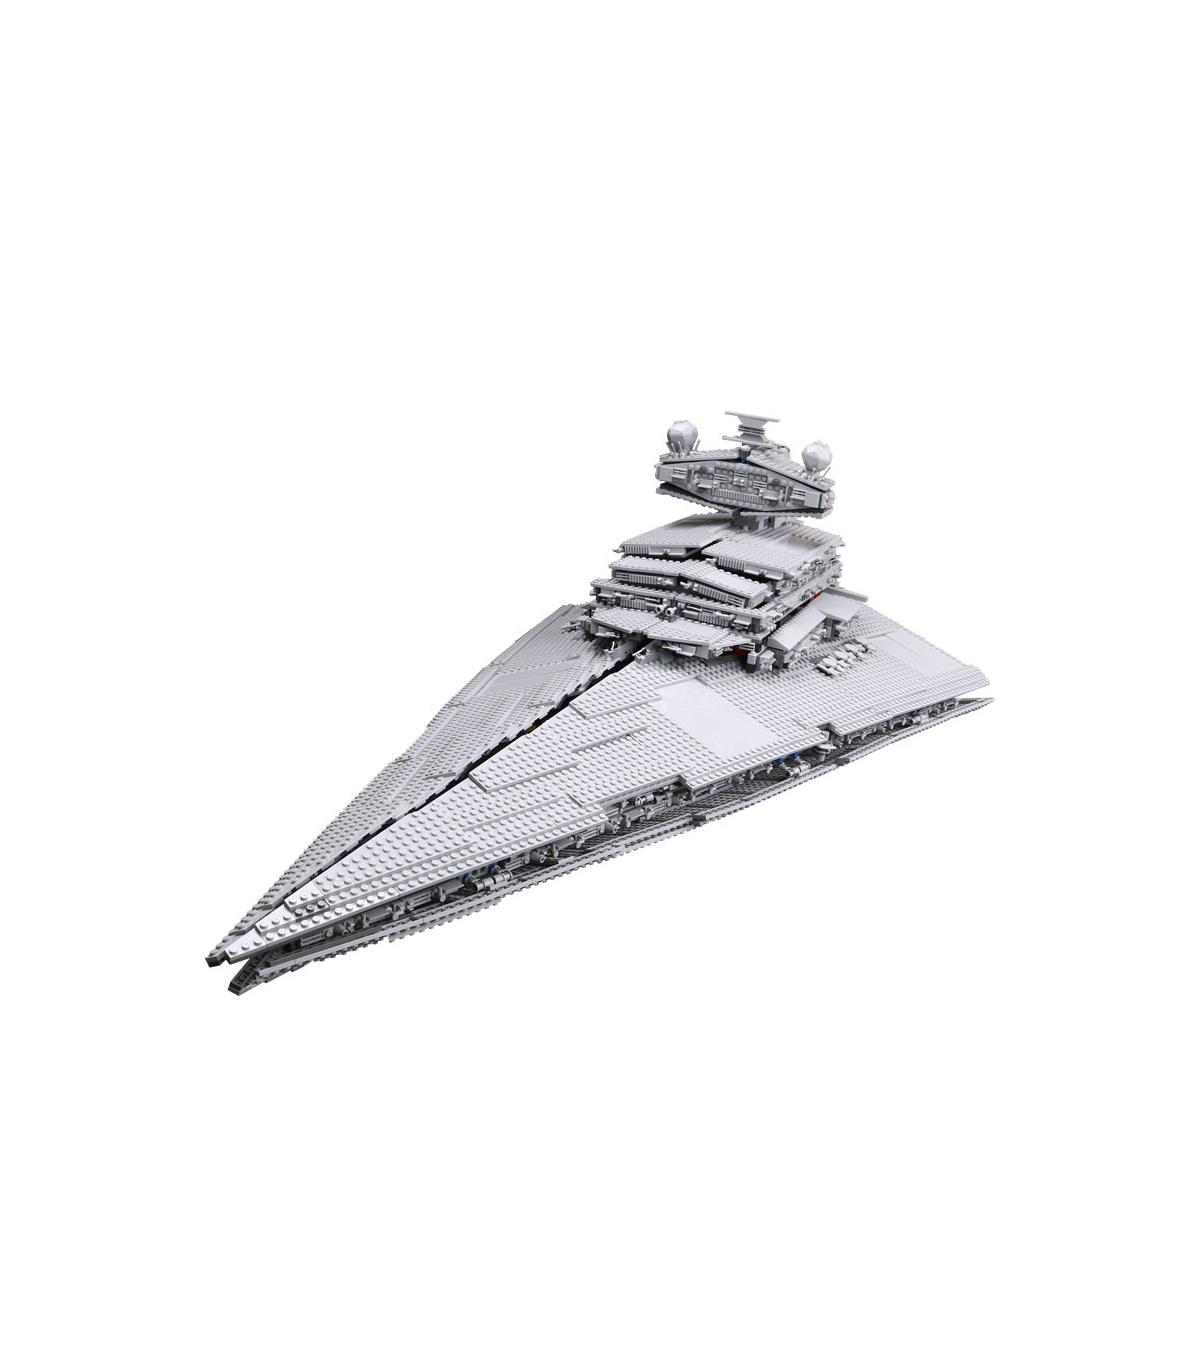 Custom Star Wars Imperial Star Destroyer Building Bricks Toy Set